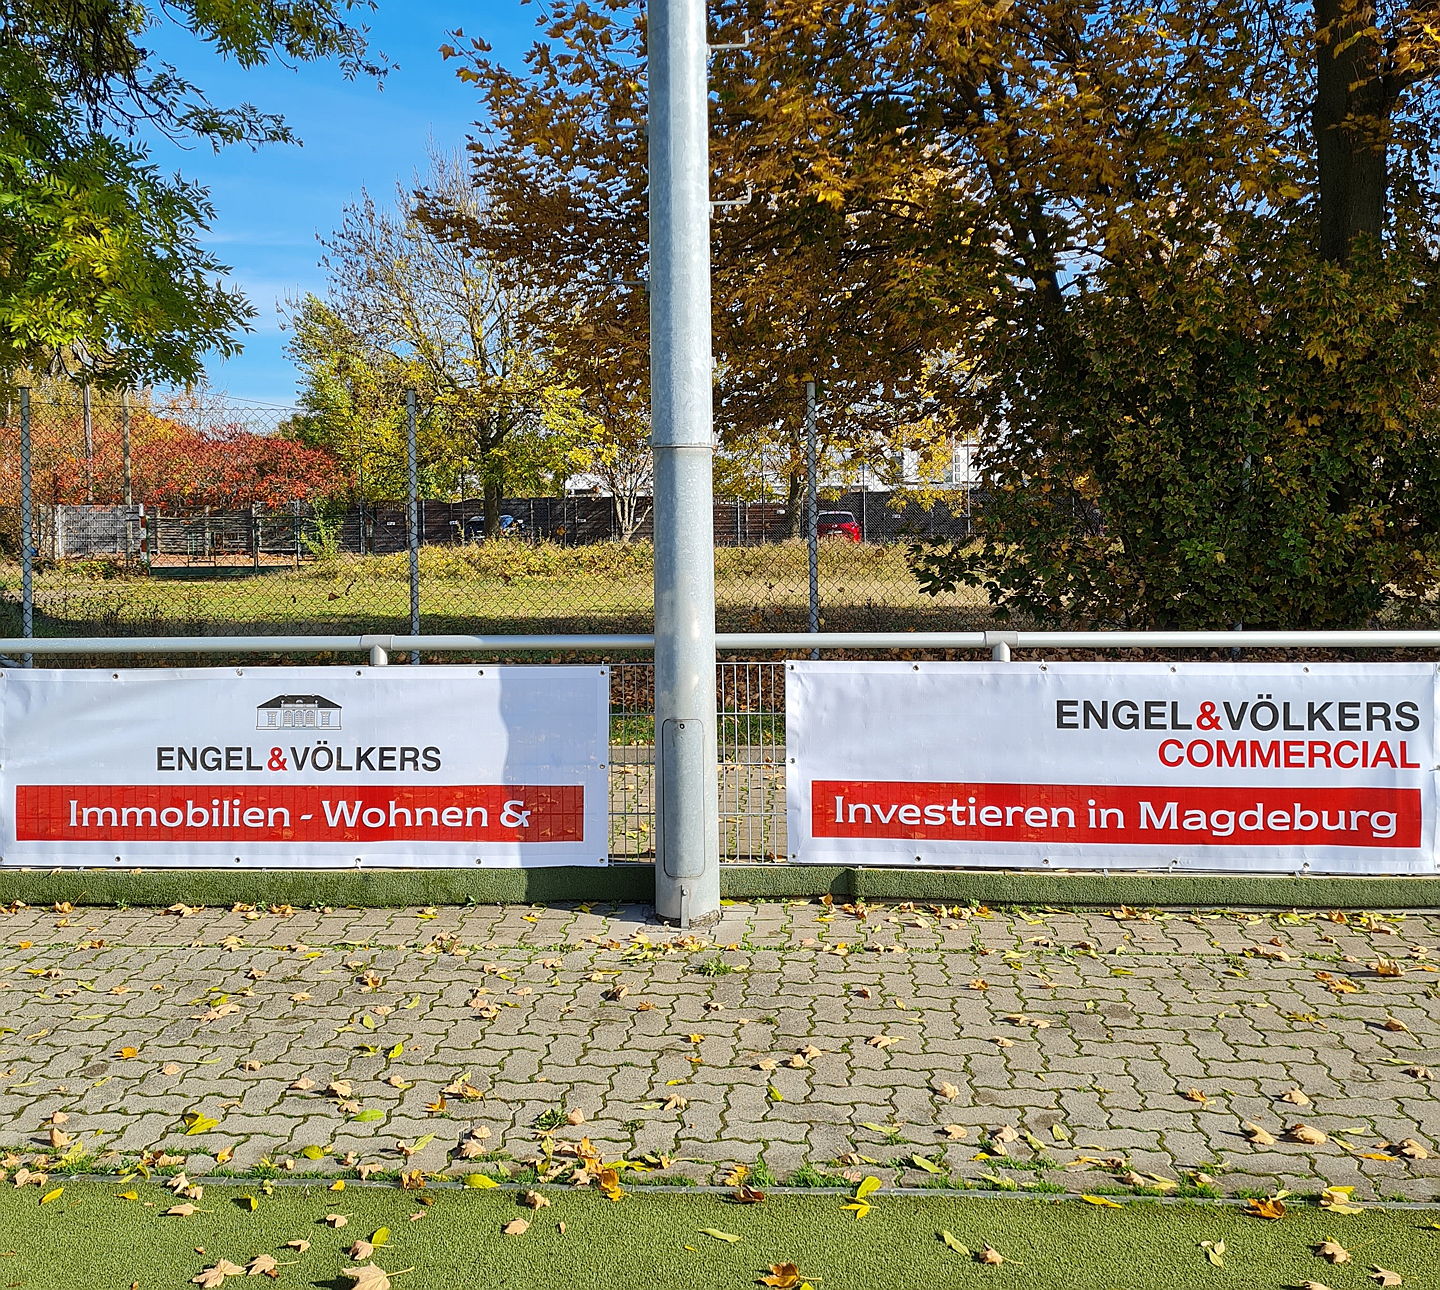  Magdeburg
- Plakate Engel & Völkers am Zaun des Stadions